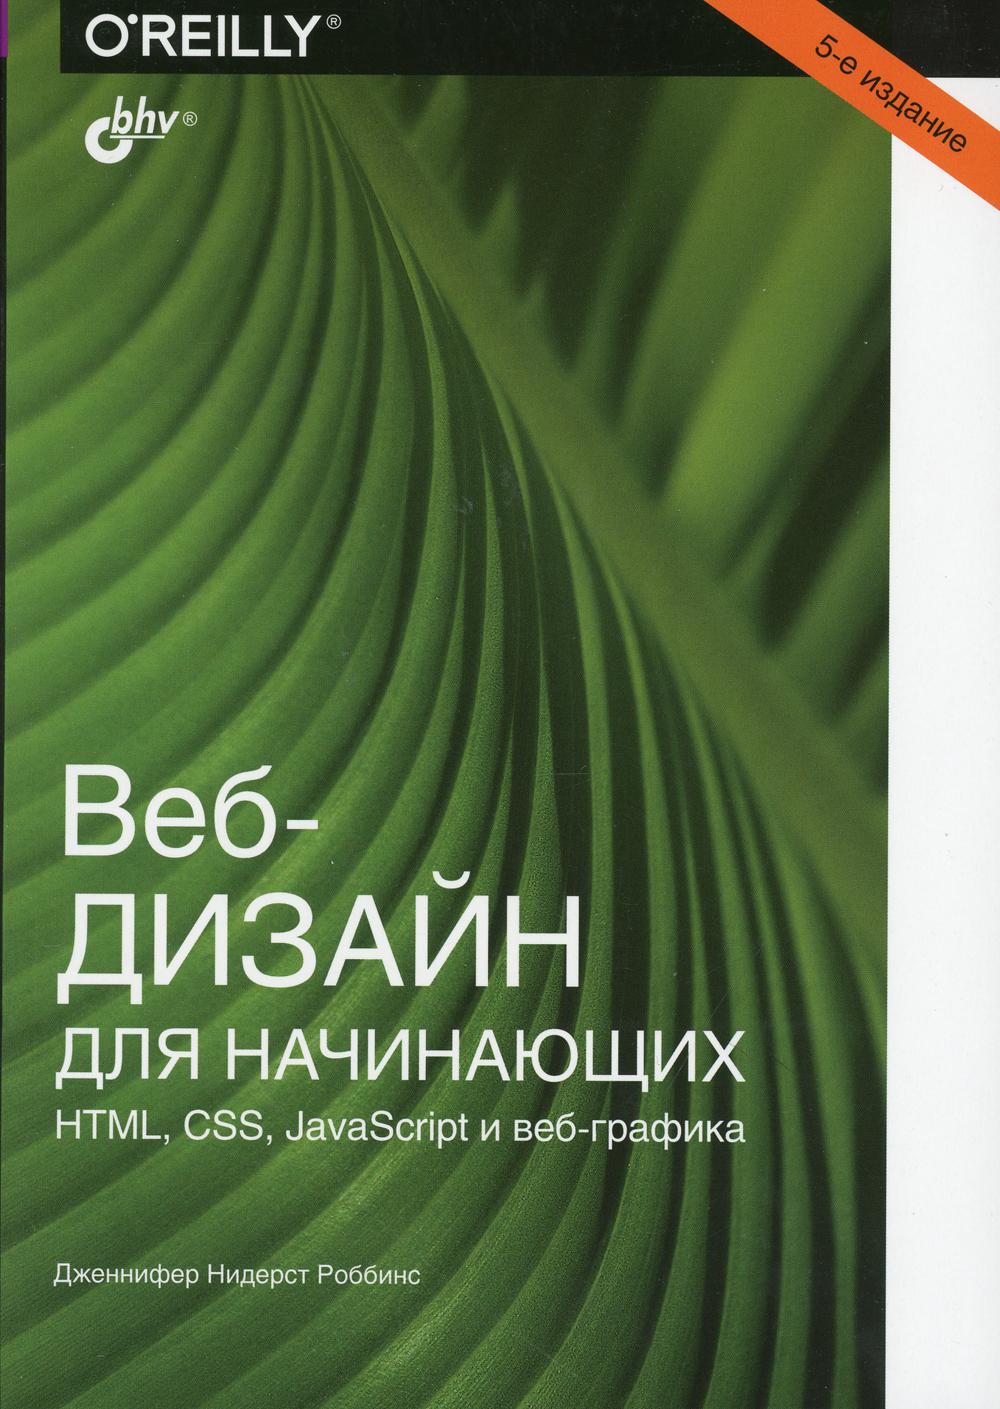 -  . HTML, CSS, JavaScript  -. 5- 